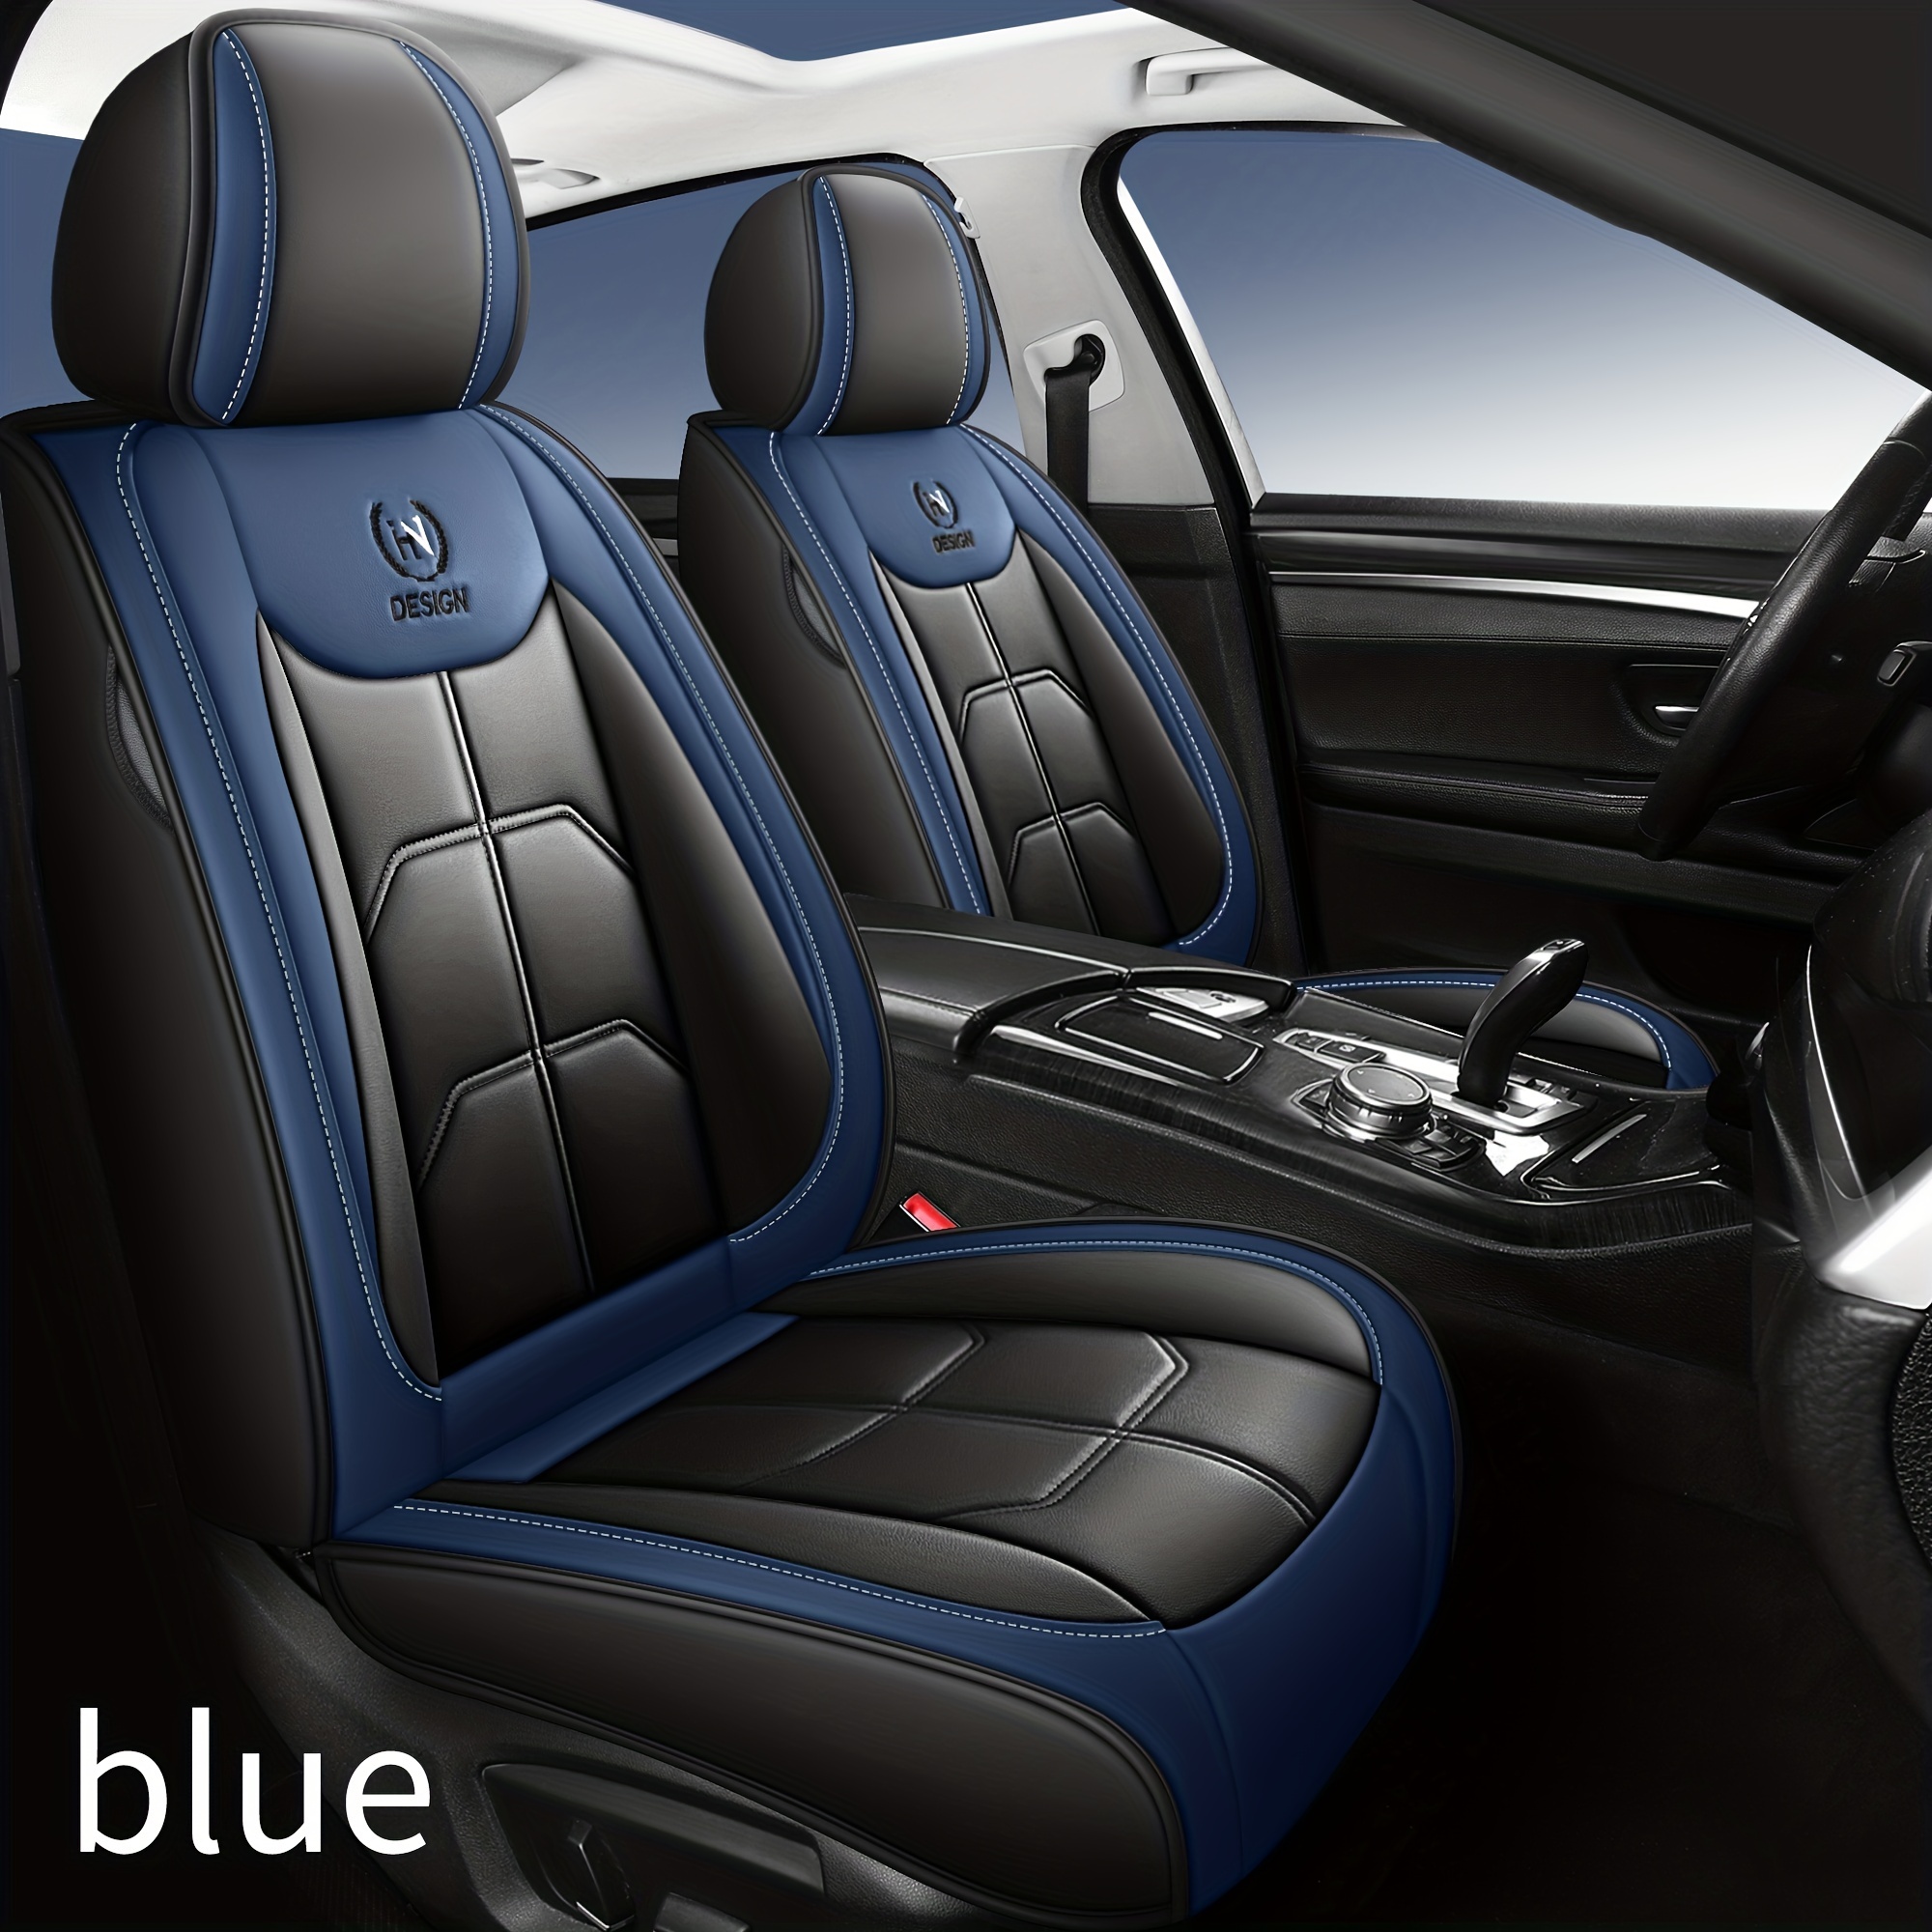 Car Seat Cover in Black and Blue. Fully Customized, Pegasus Premium